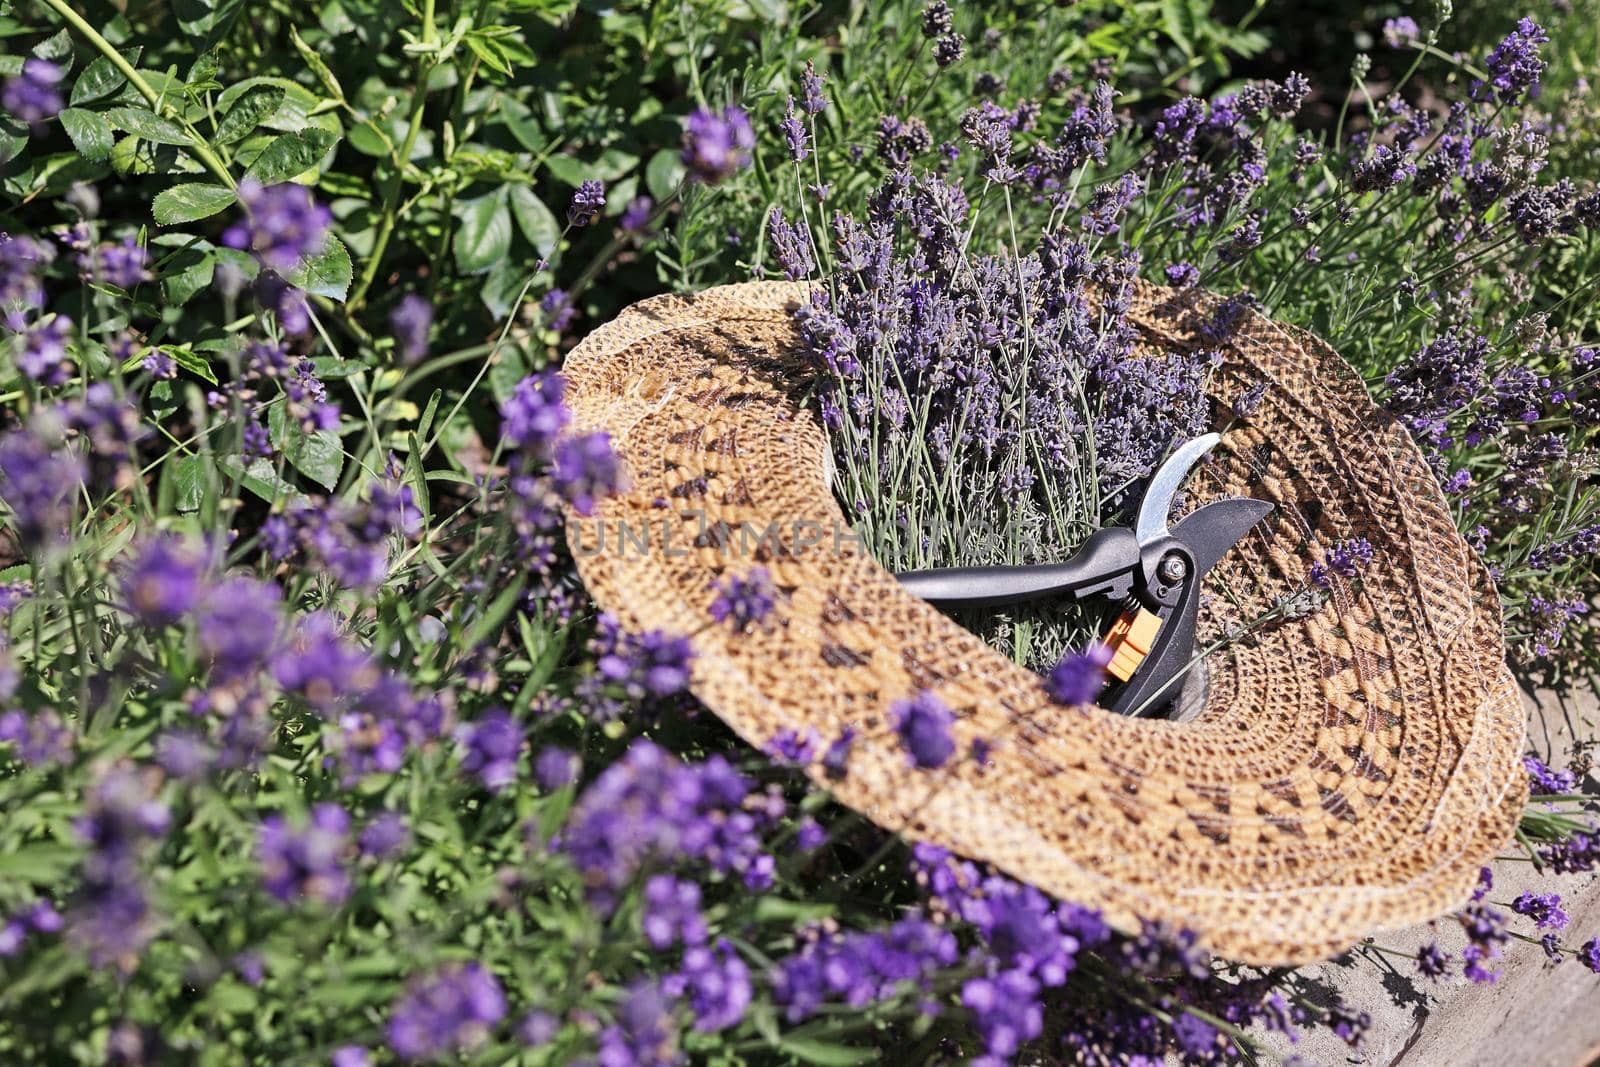 Harvesting lavender. Cut dry lavender inflorescences and a garden pruner in a hat against the background of lavender bushes. Summer.